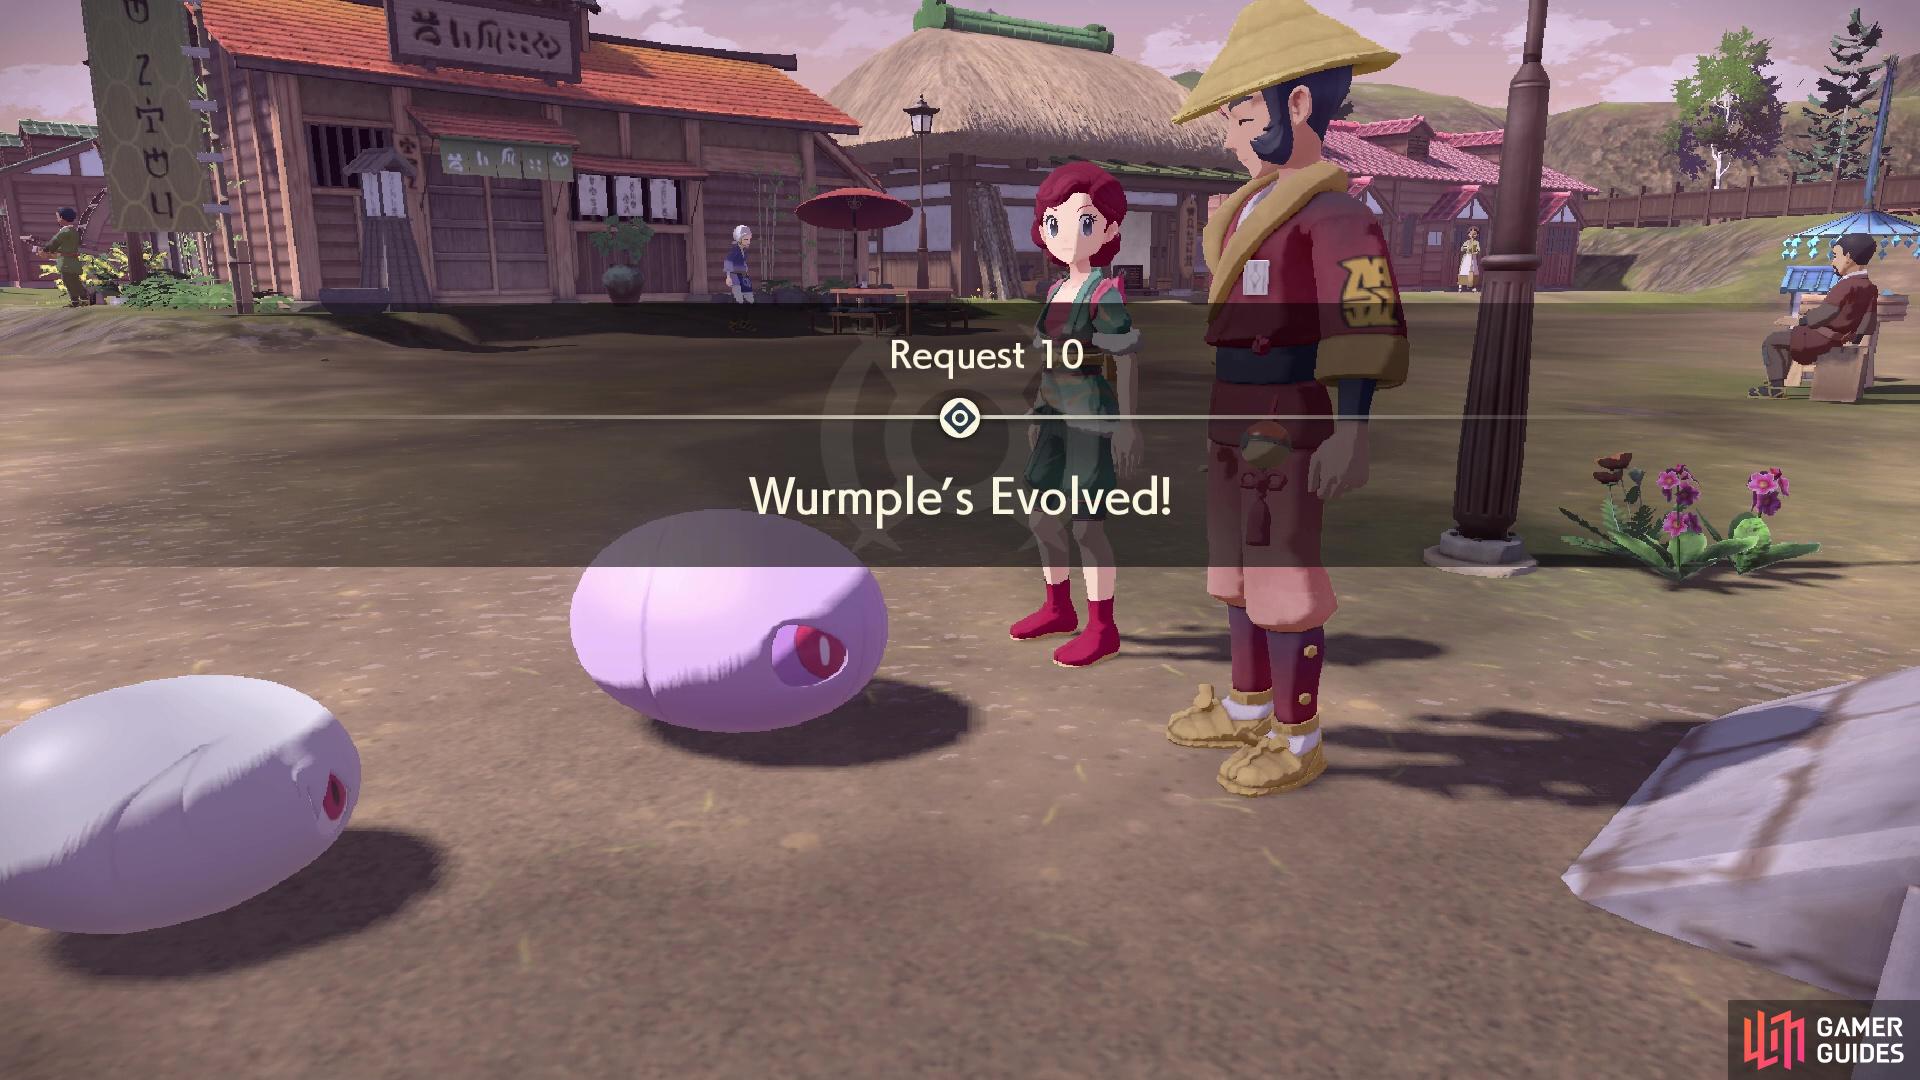 Request 10: Wurmple's Evolved!